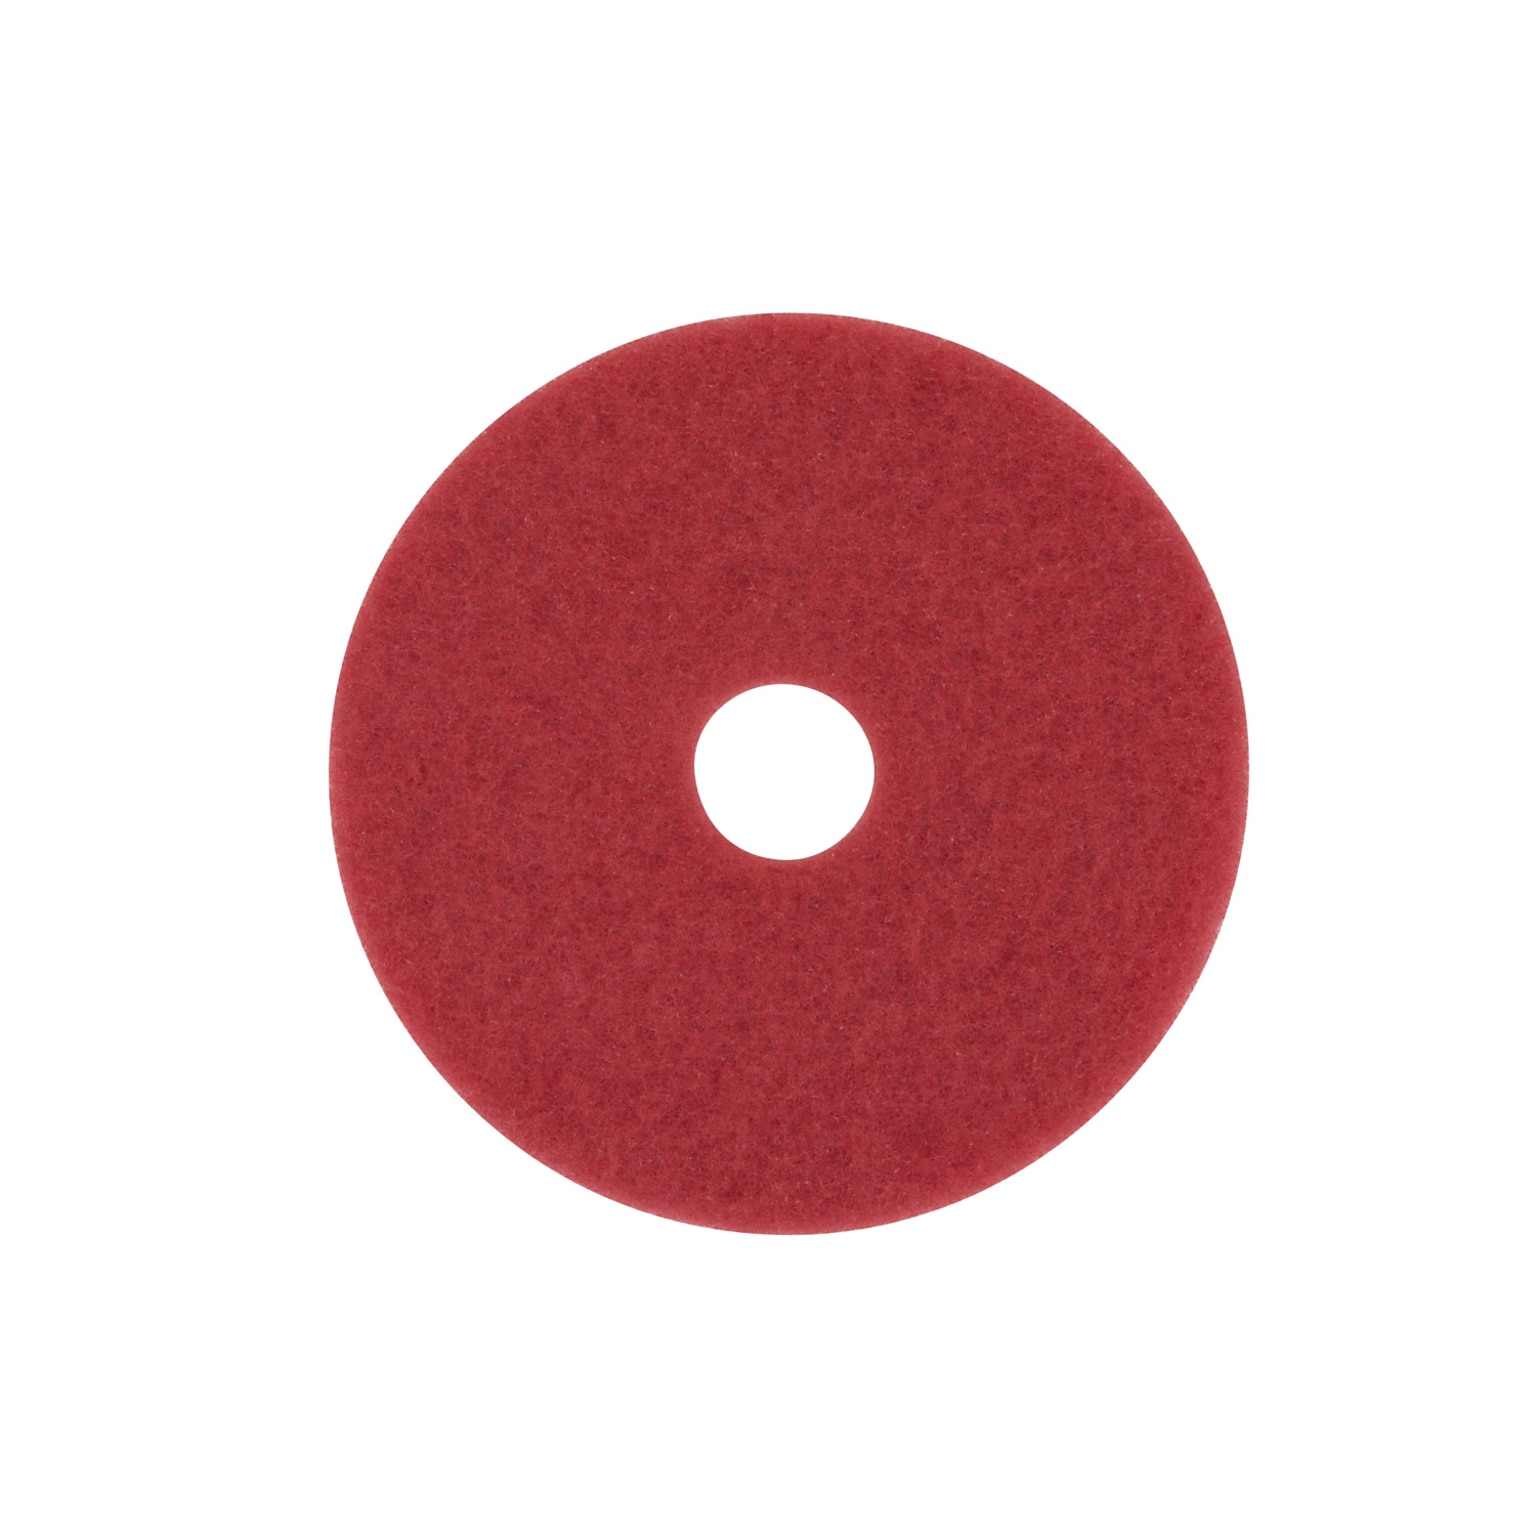 3M Buffing Floor Pad, Red, 5/Carton (510012)